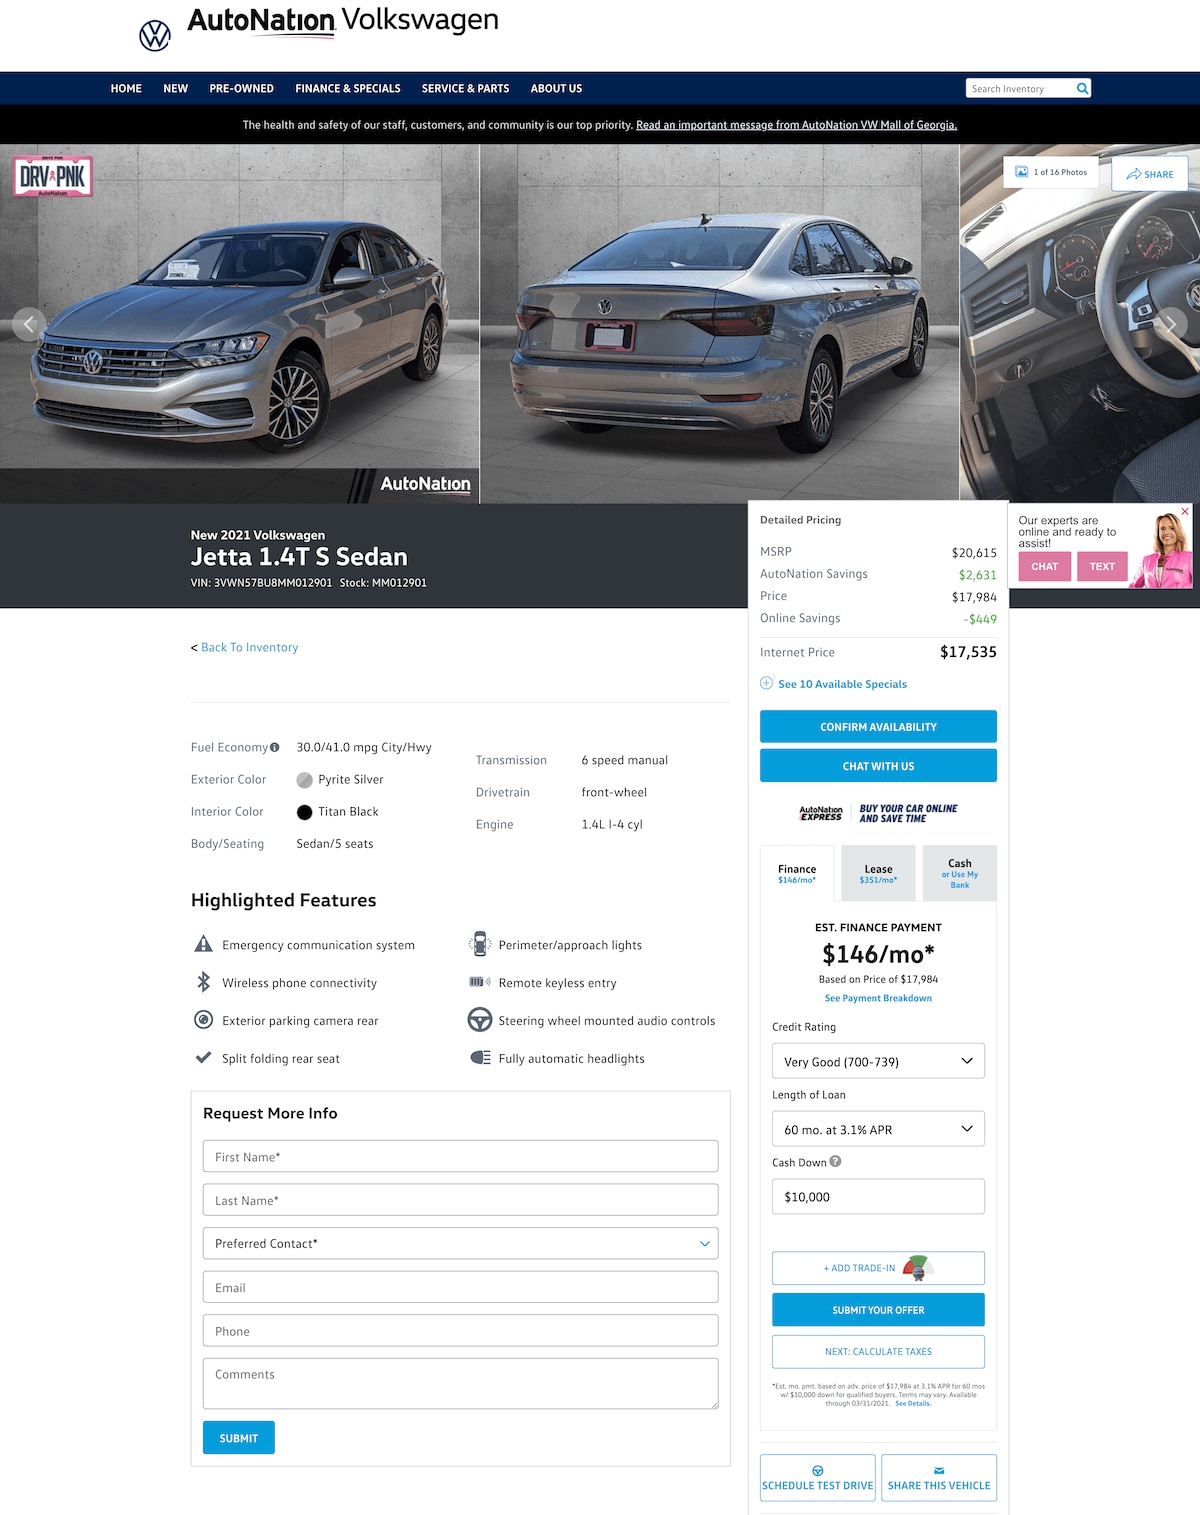 AutoNation VW Mall of Georgia vehicle details page